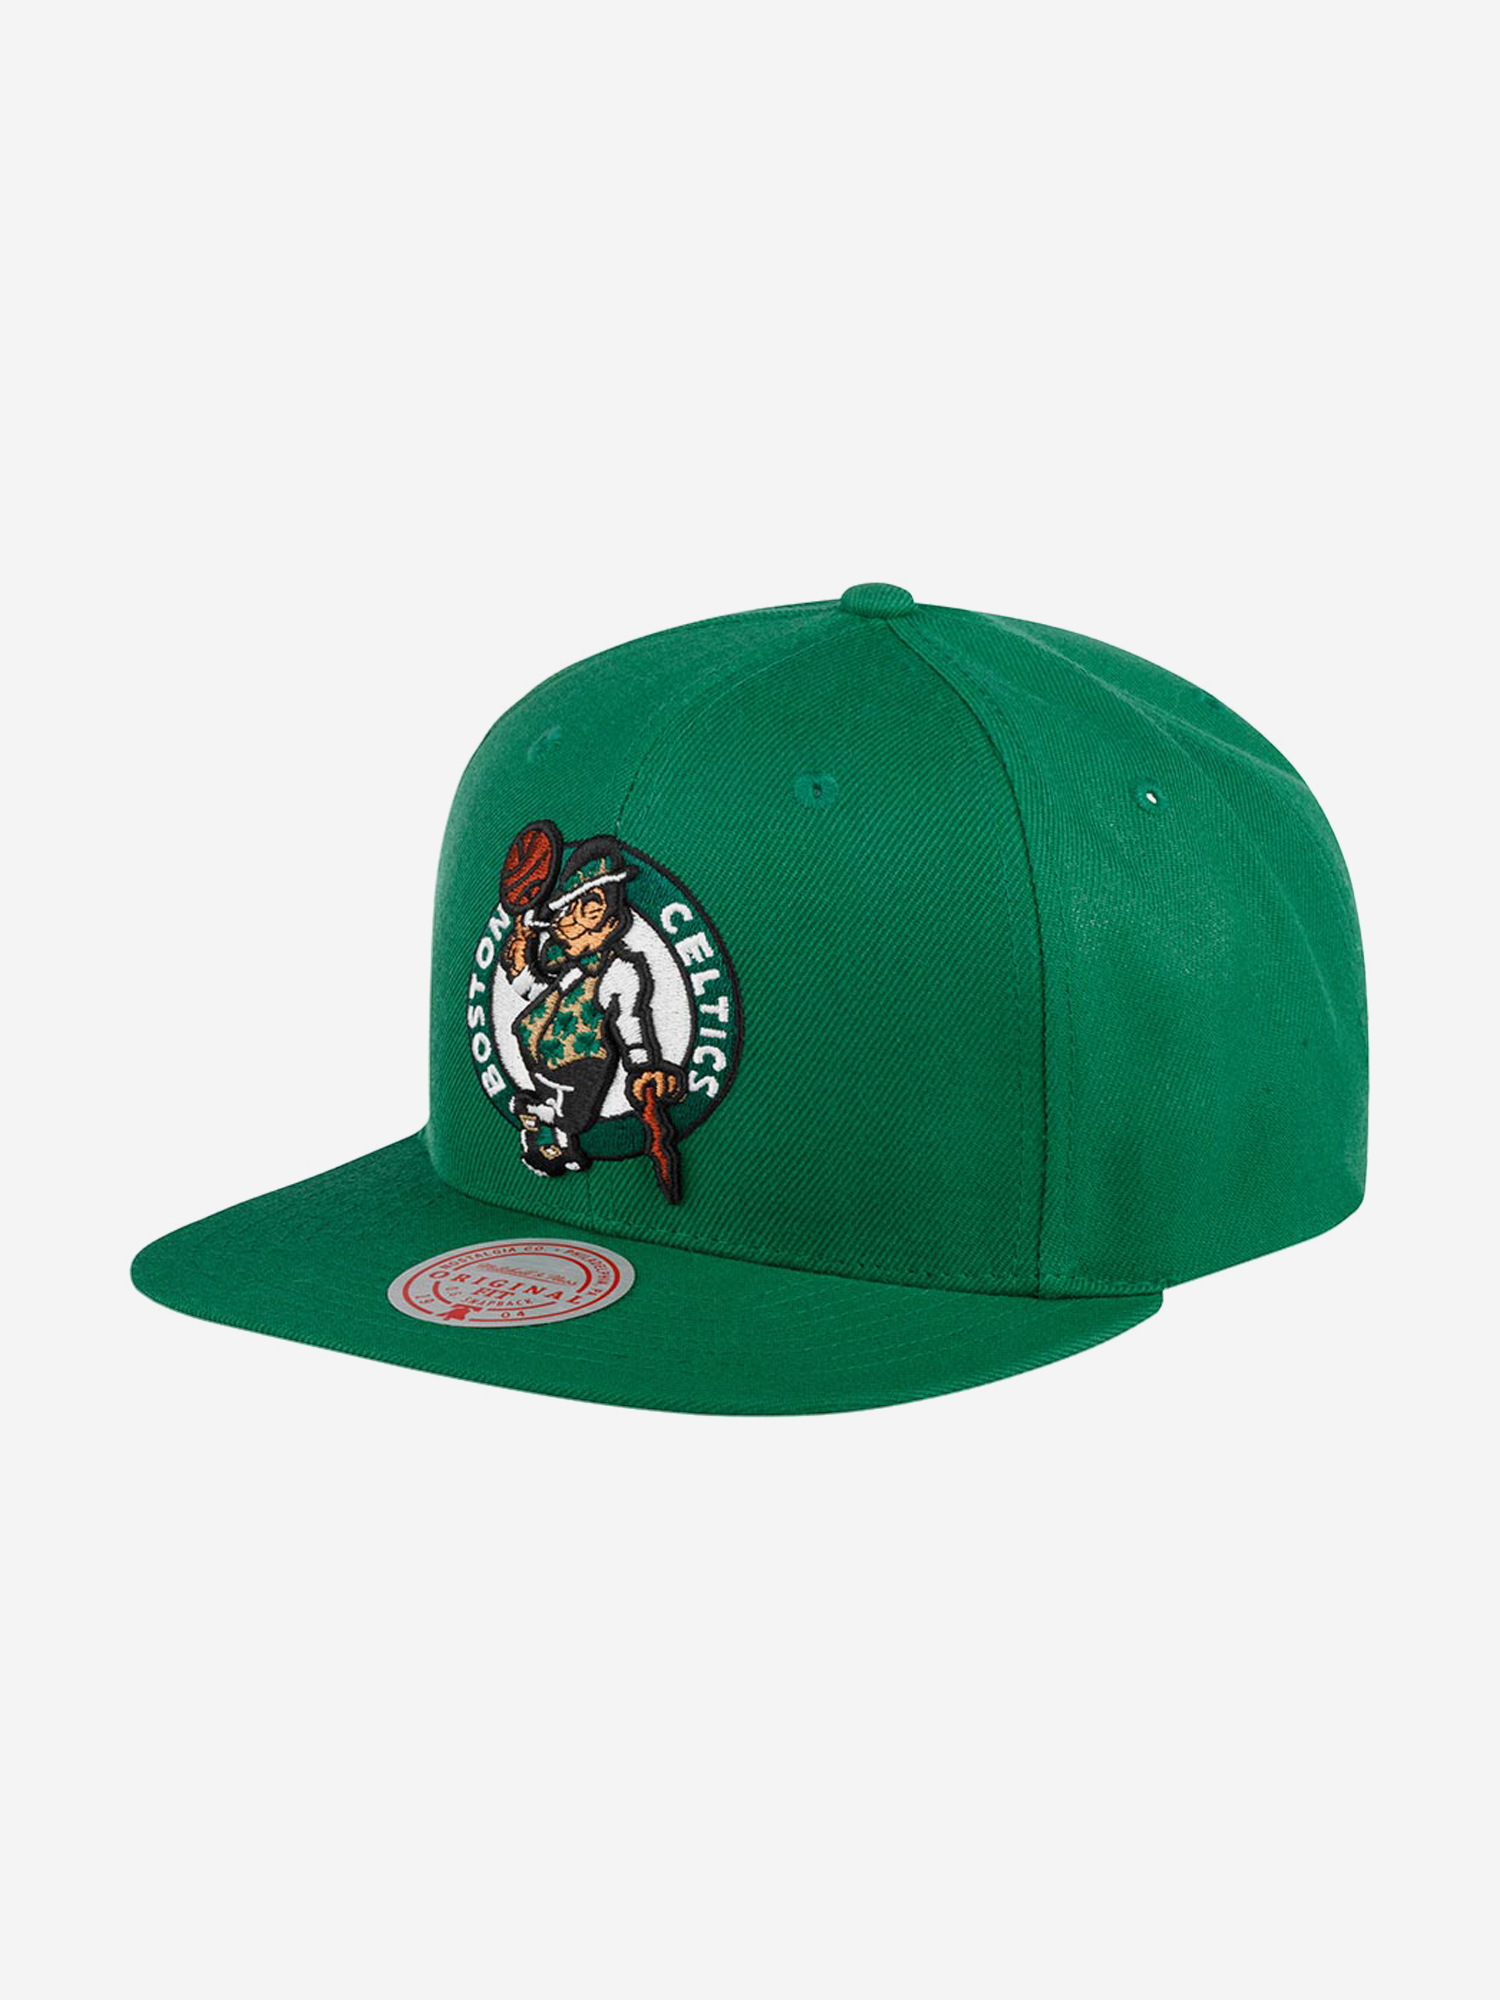 Бейсболка с прямым козырьком MITCHELL NESS HHSS3256-BCEYYPPPGREN Boston Celtics NBA (зеленый), Зеленый